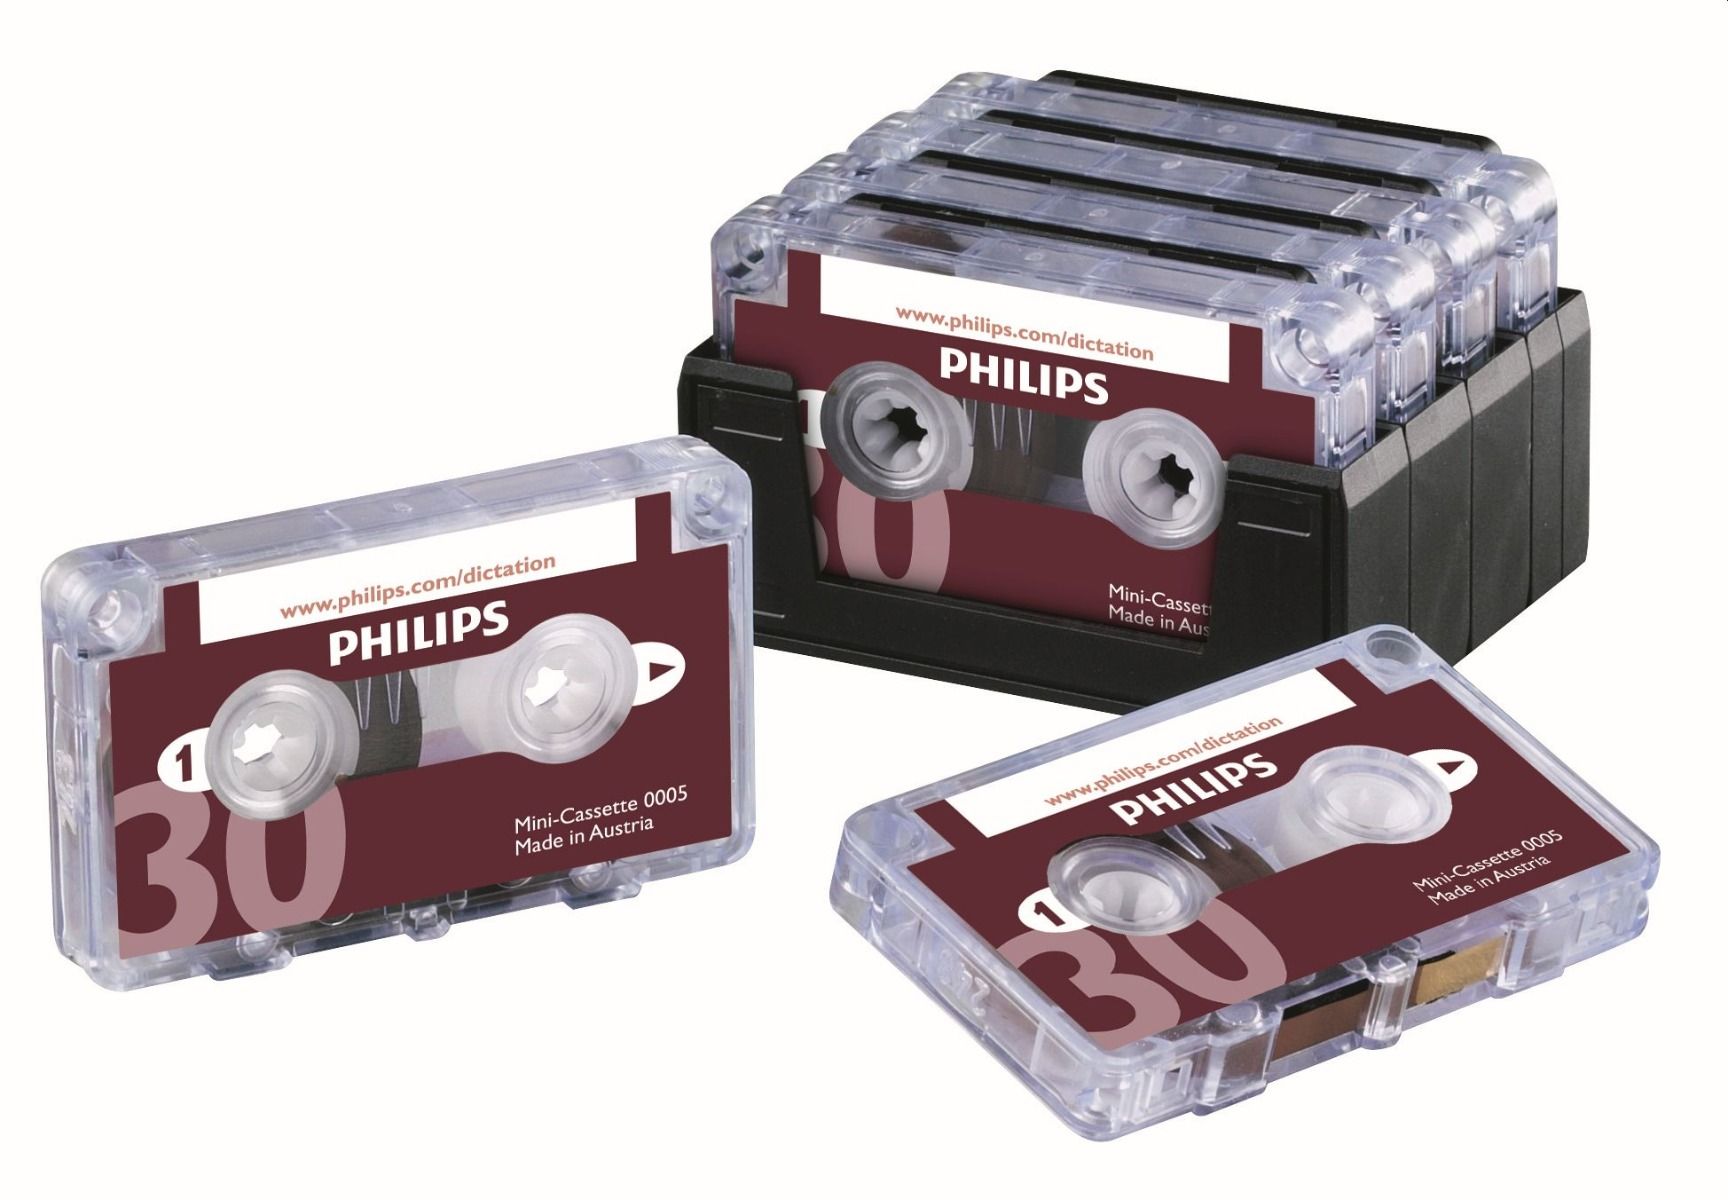 Mini Cassette Analogue Dictation Tape : Philips LFH0005 Mini Cassette Tapes  Box of 10